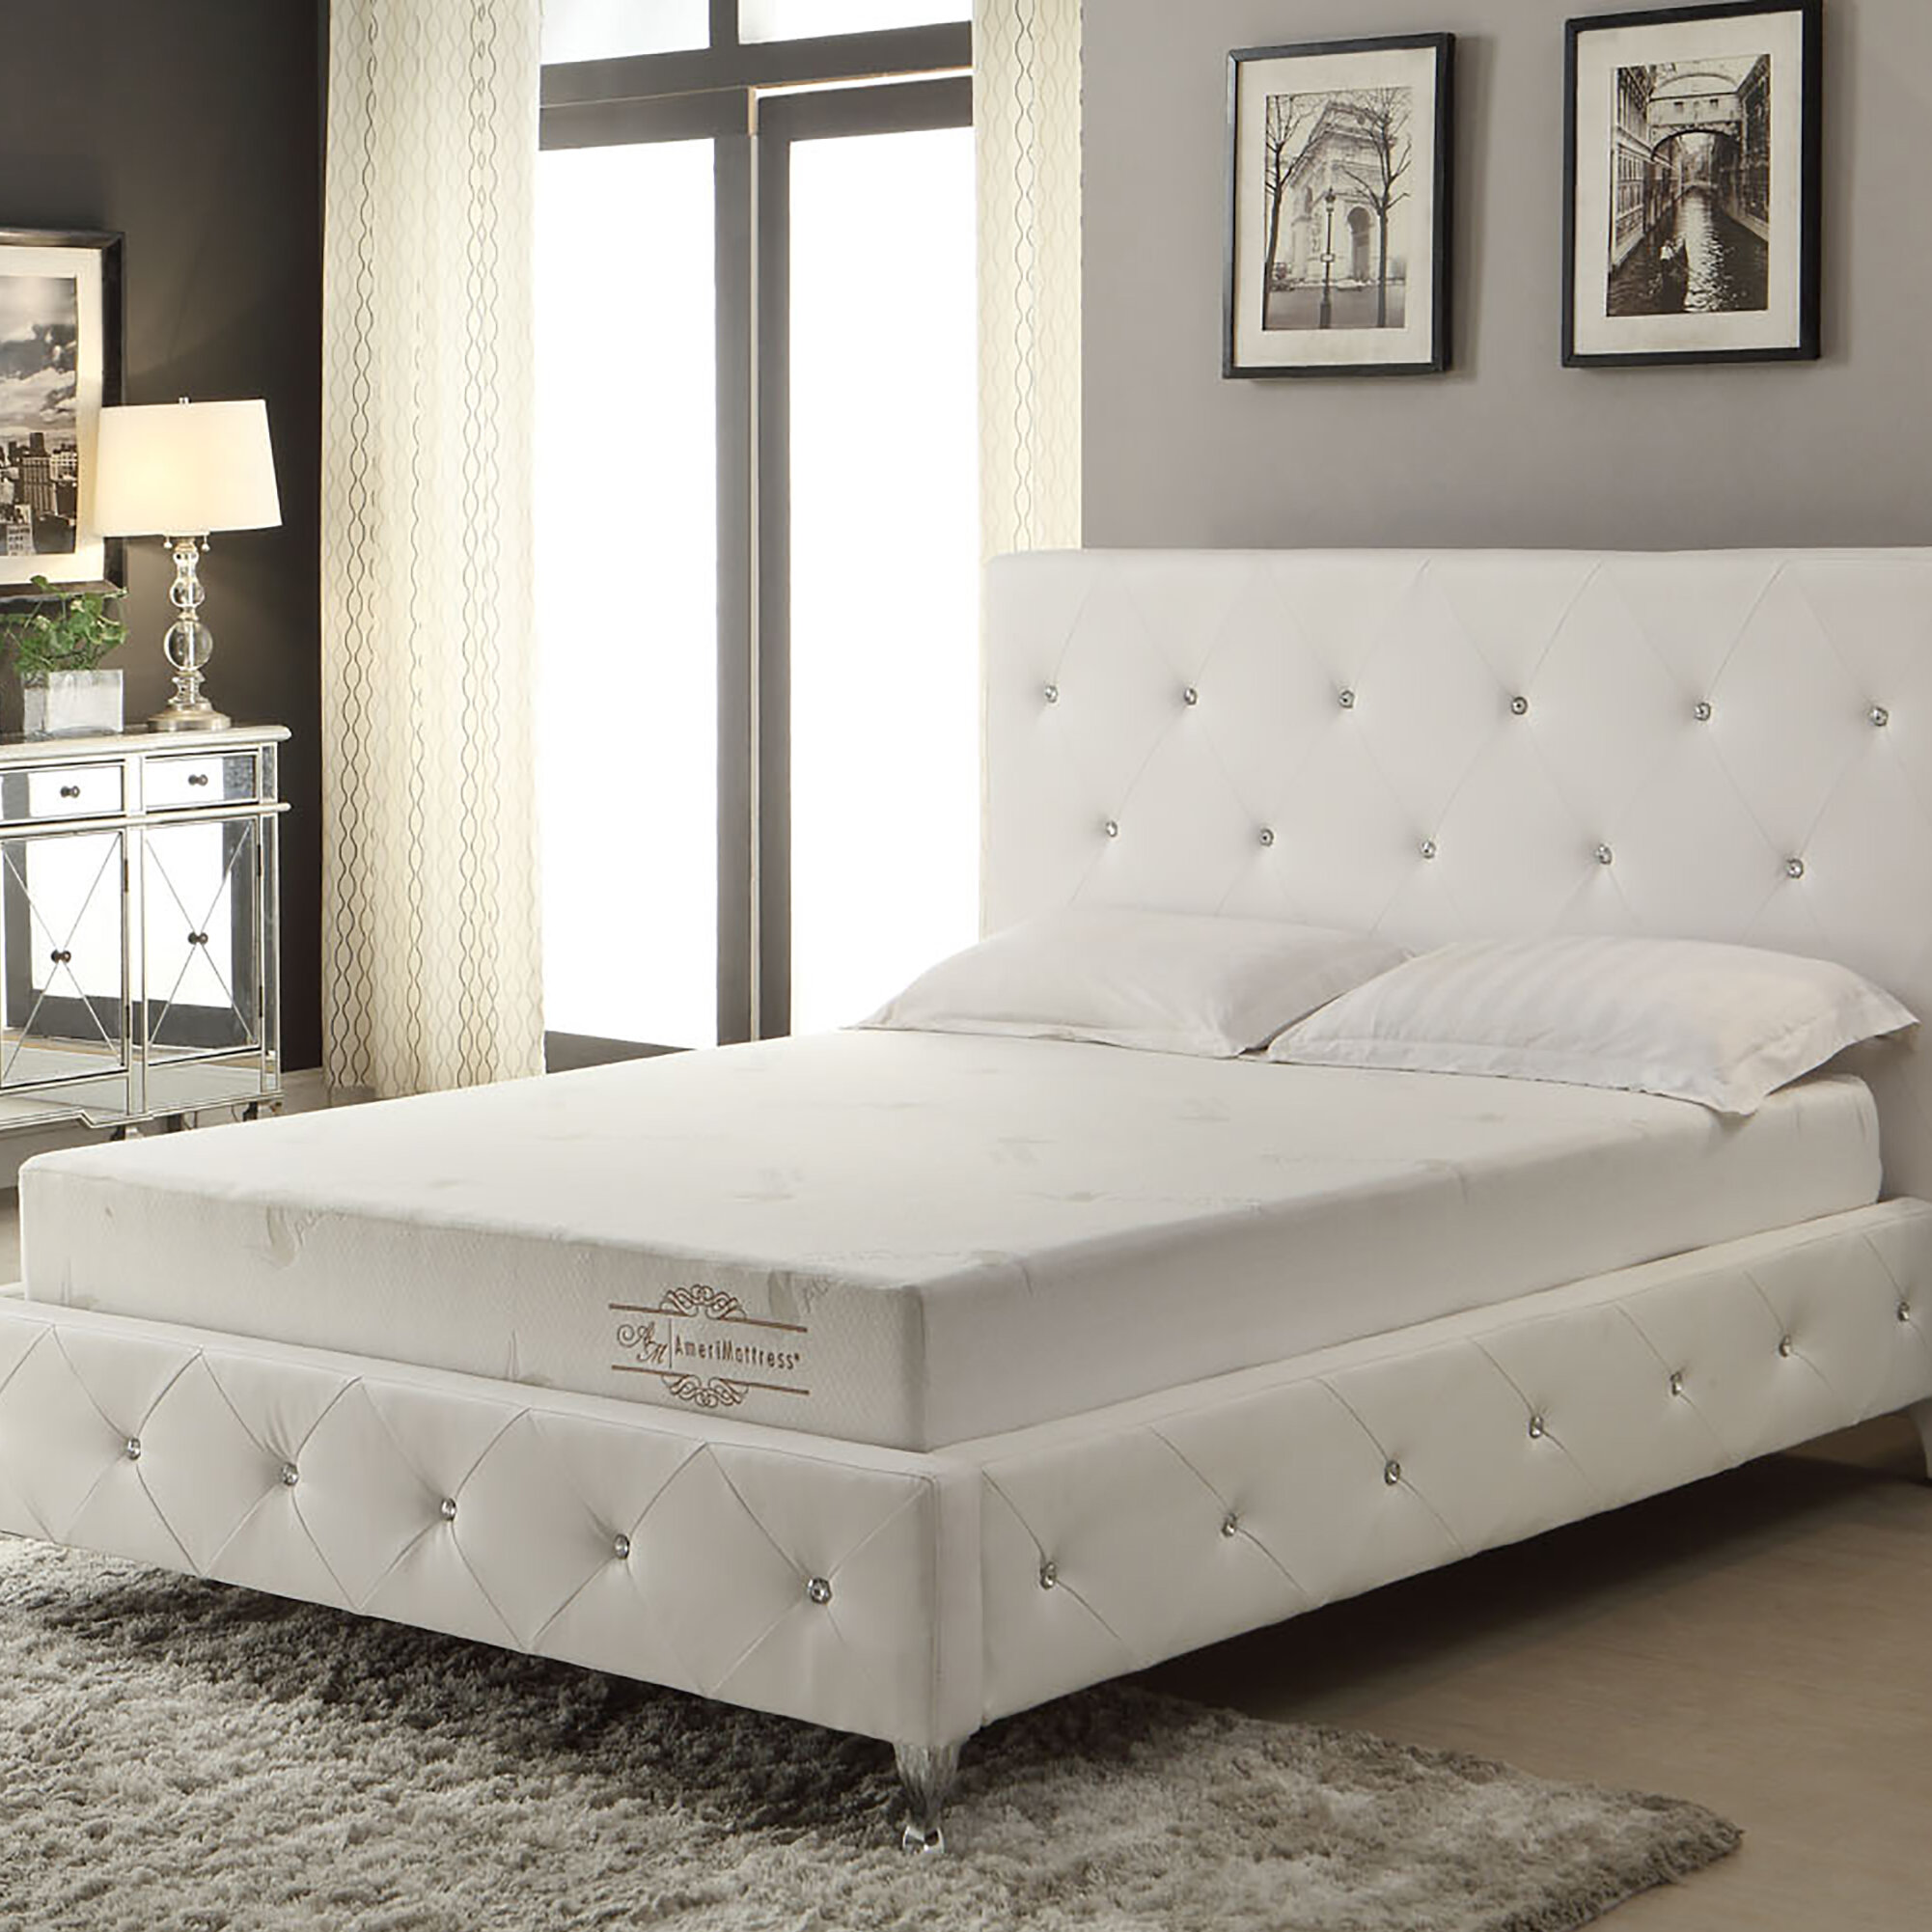 33LB Firm Twin 3 inch foam mattress topper Save $300 